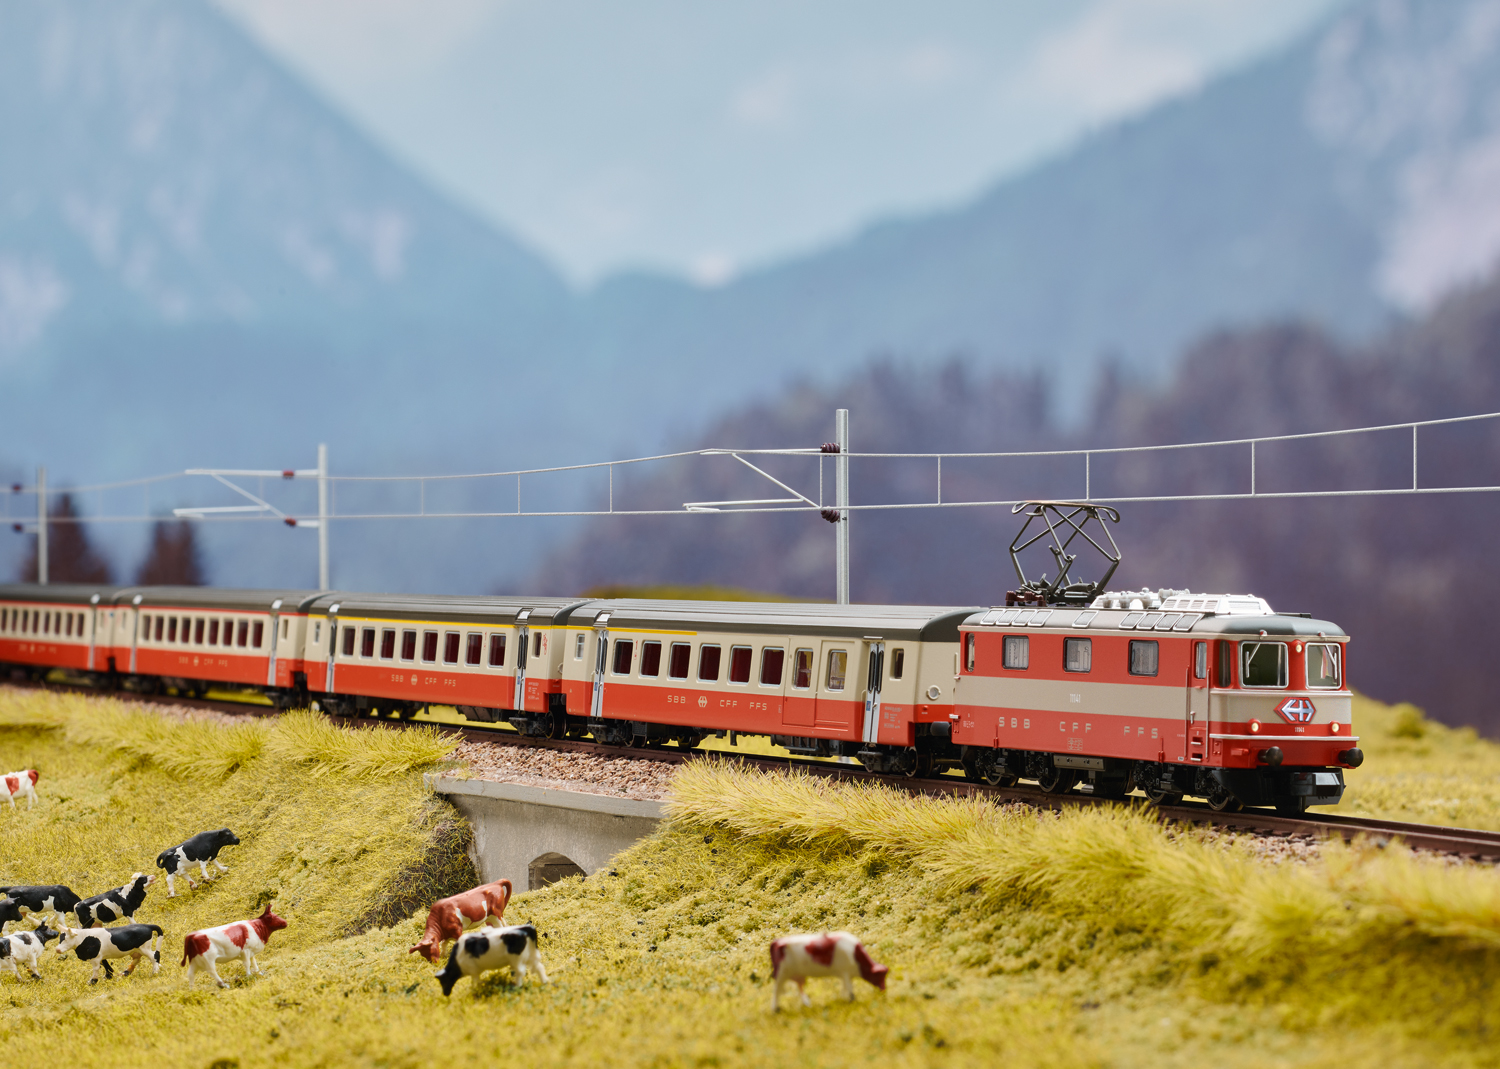 Minitrix 16883 SBB E-Lokomotive Swiss Express Reihe Re 4/4 II 